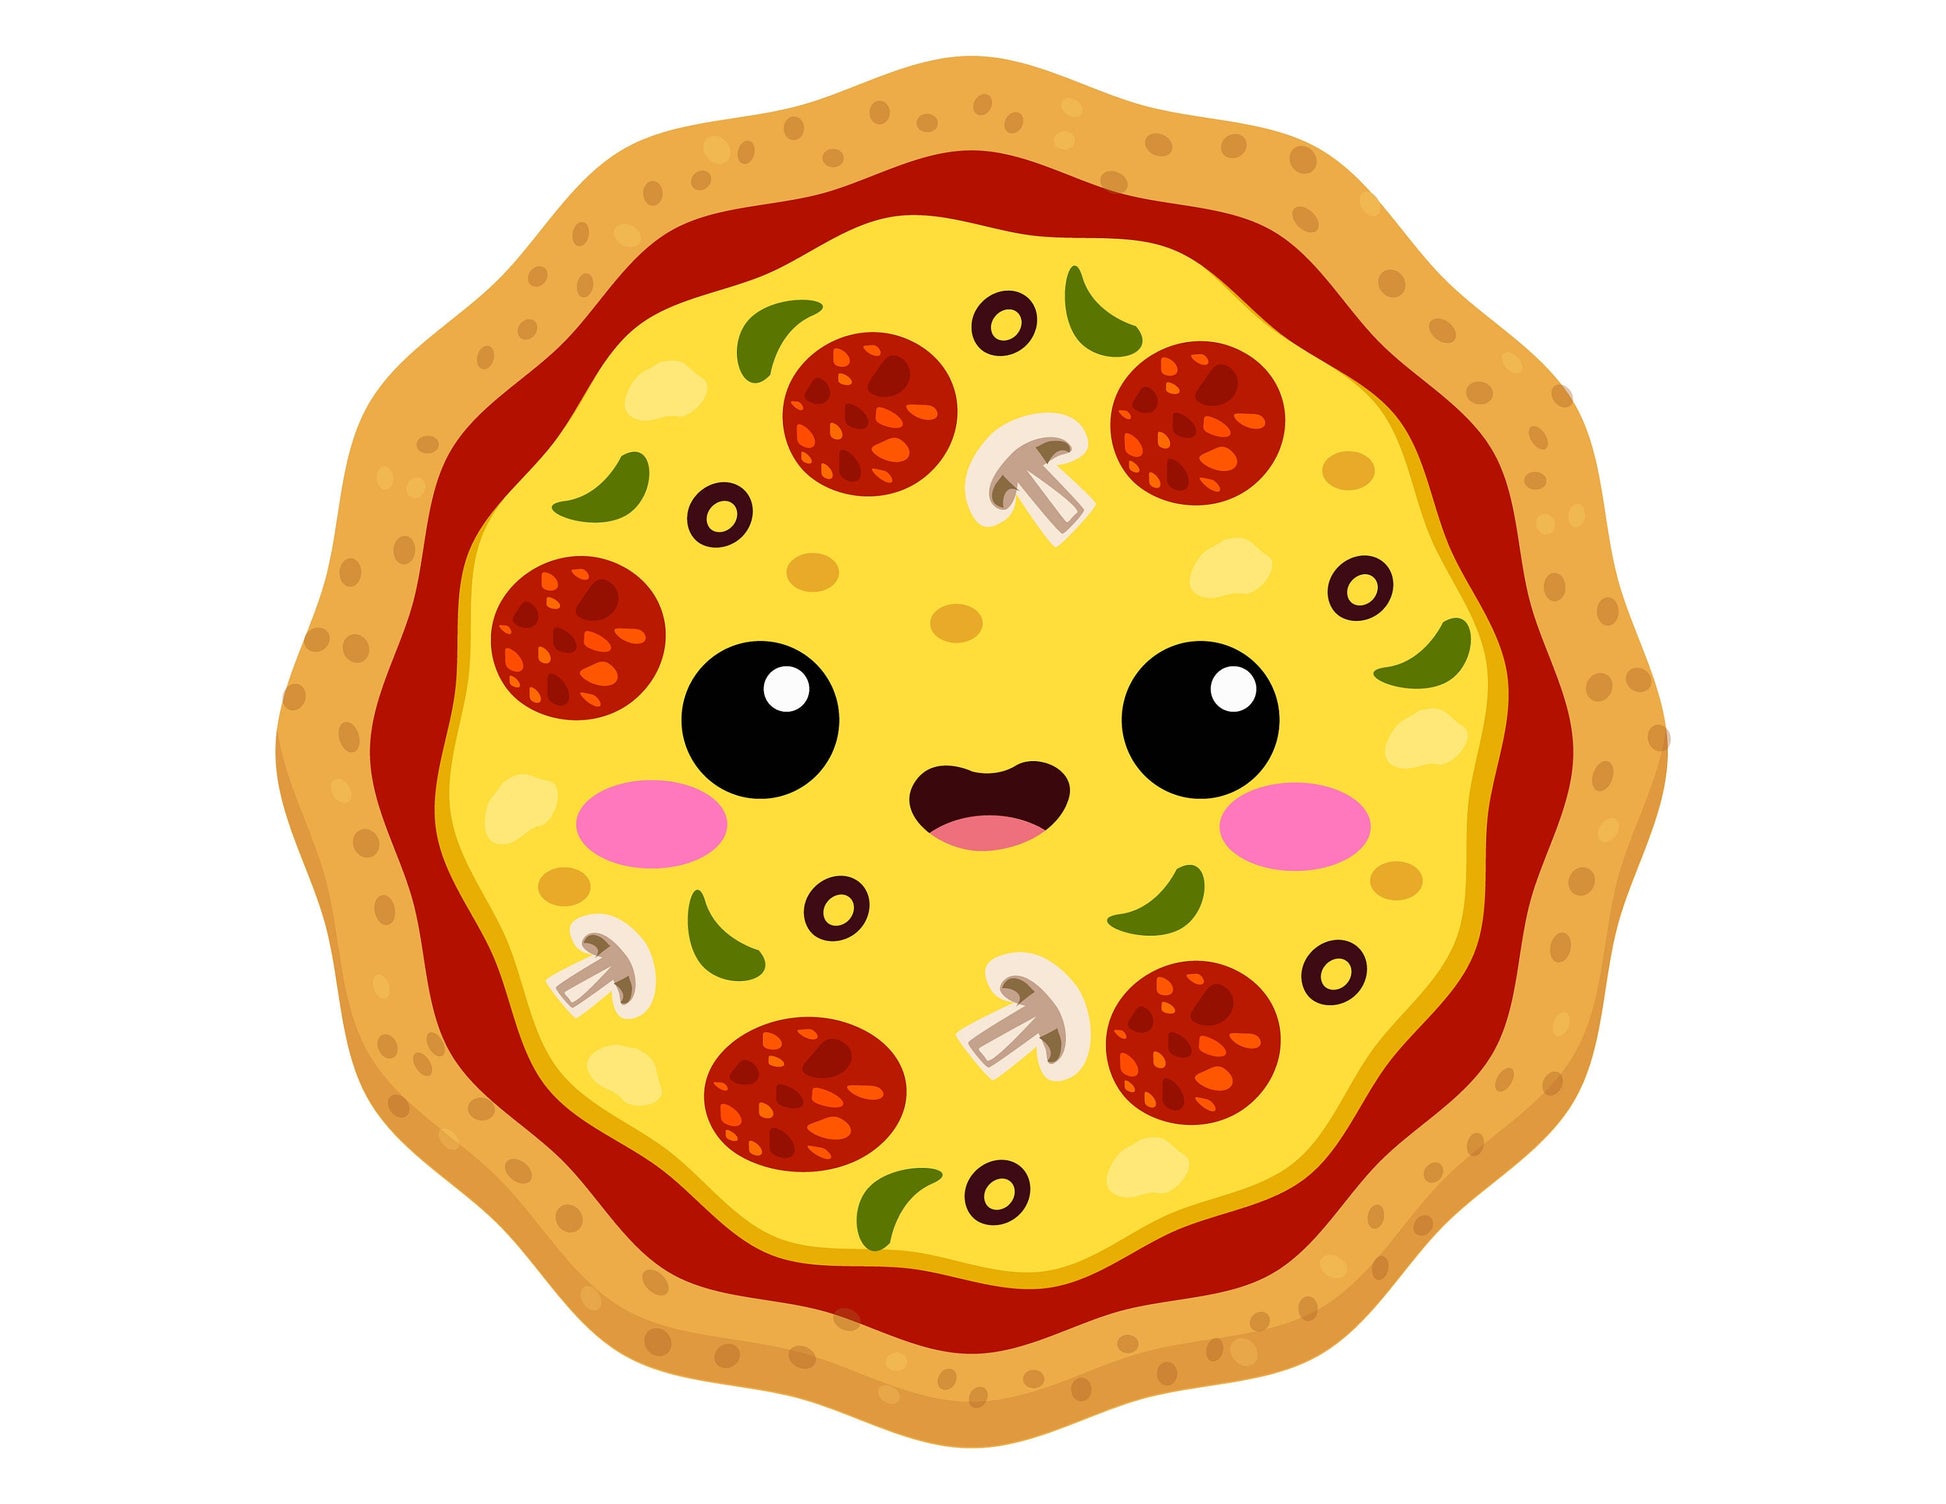 Pizza Cookie Cutters | STL File